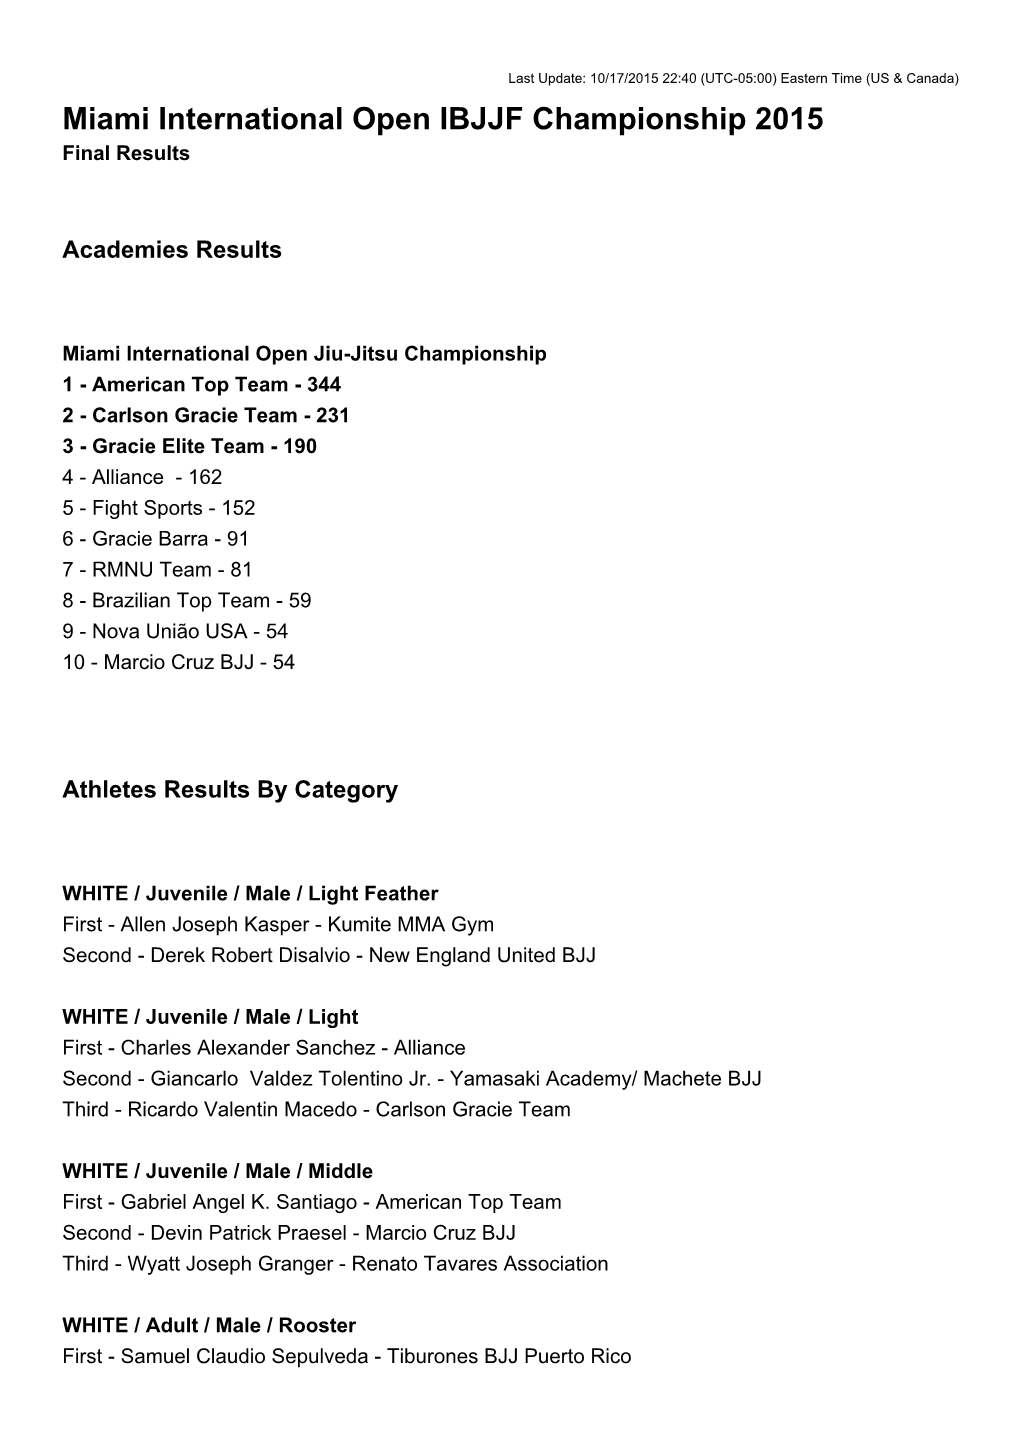 Miami International Open IBJJF Championship 2015 Final Results